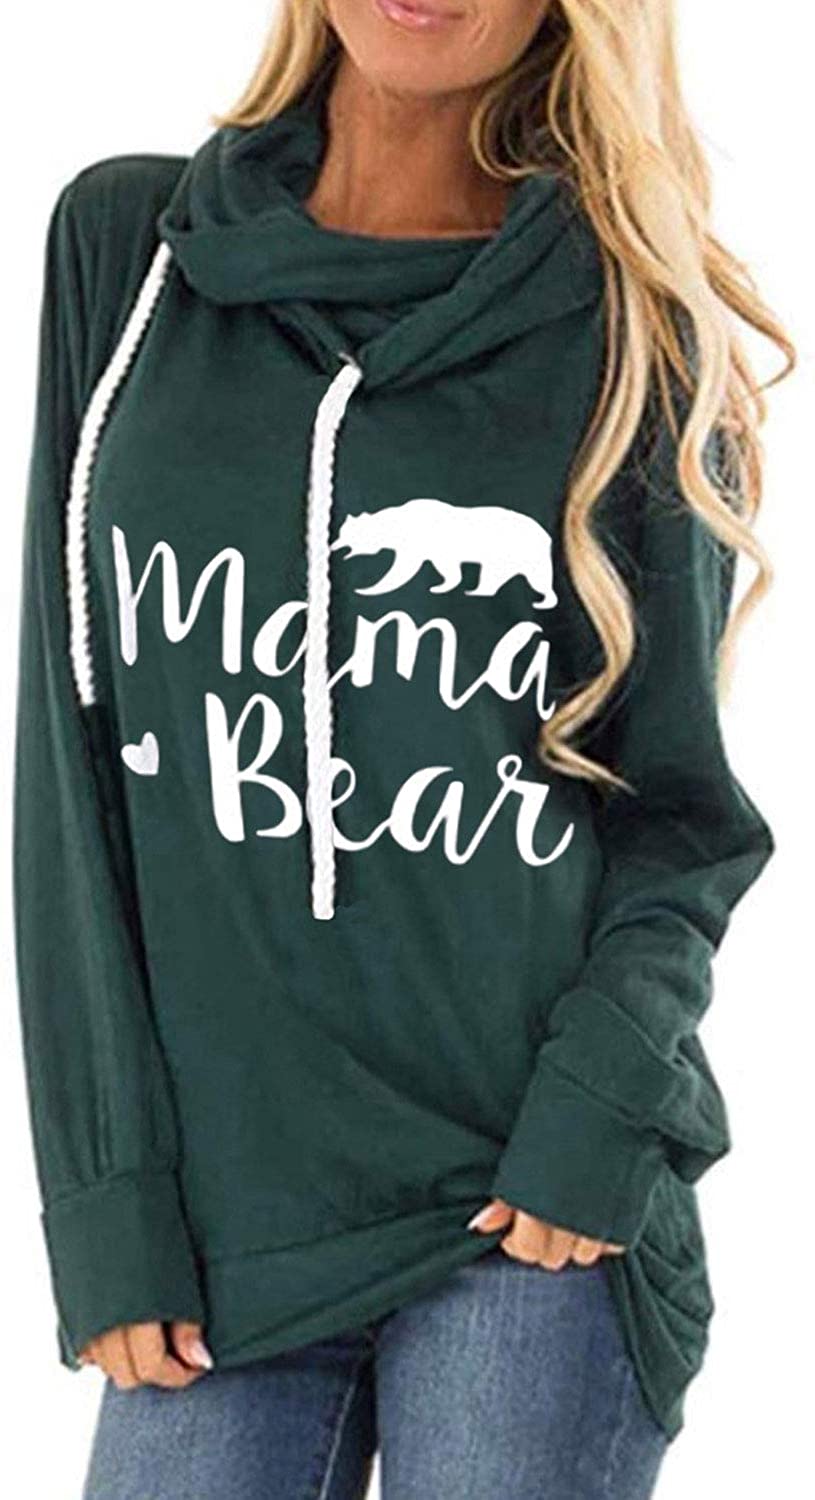 ALBIZIA Long Sleeve Sweatshirt for Women Mama Bear Printed Pullover Hoodie Tunic Top